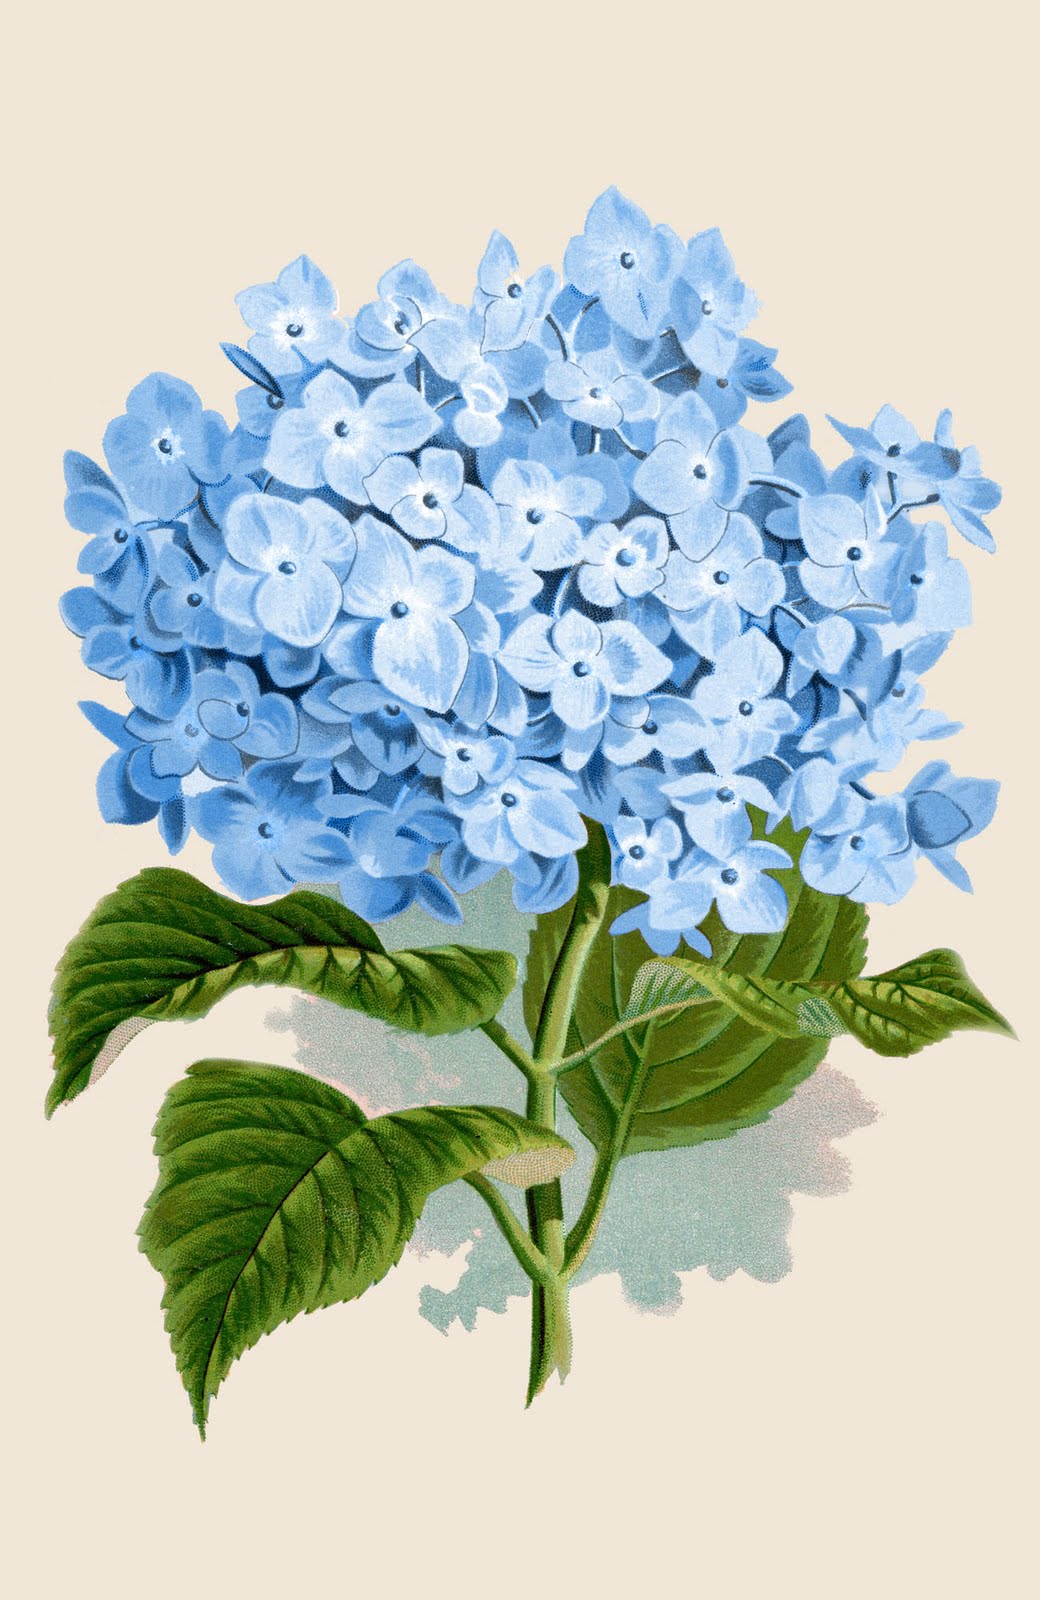     Art Printable Download   Blue Hydrangea Botanical   The Graphics Fairy